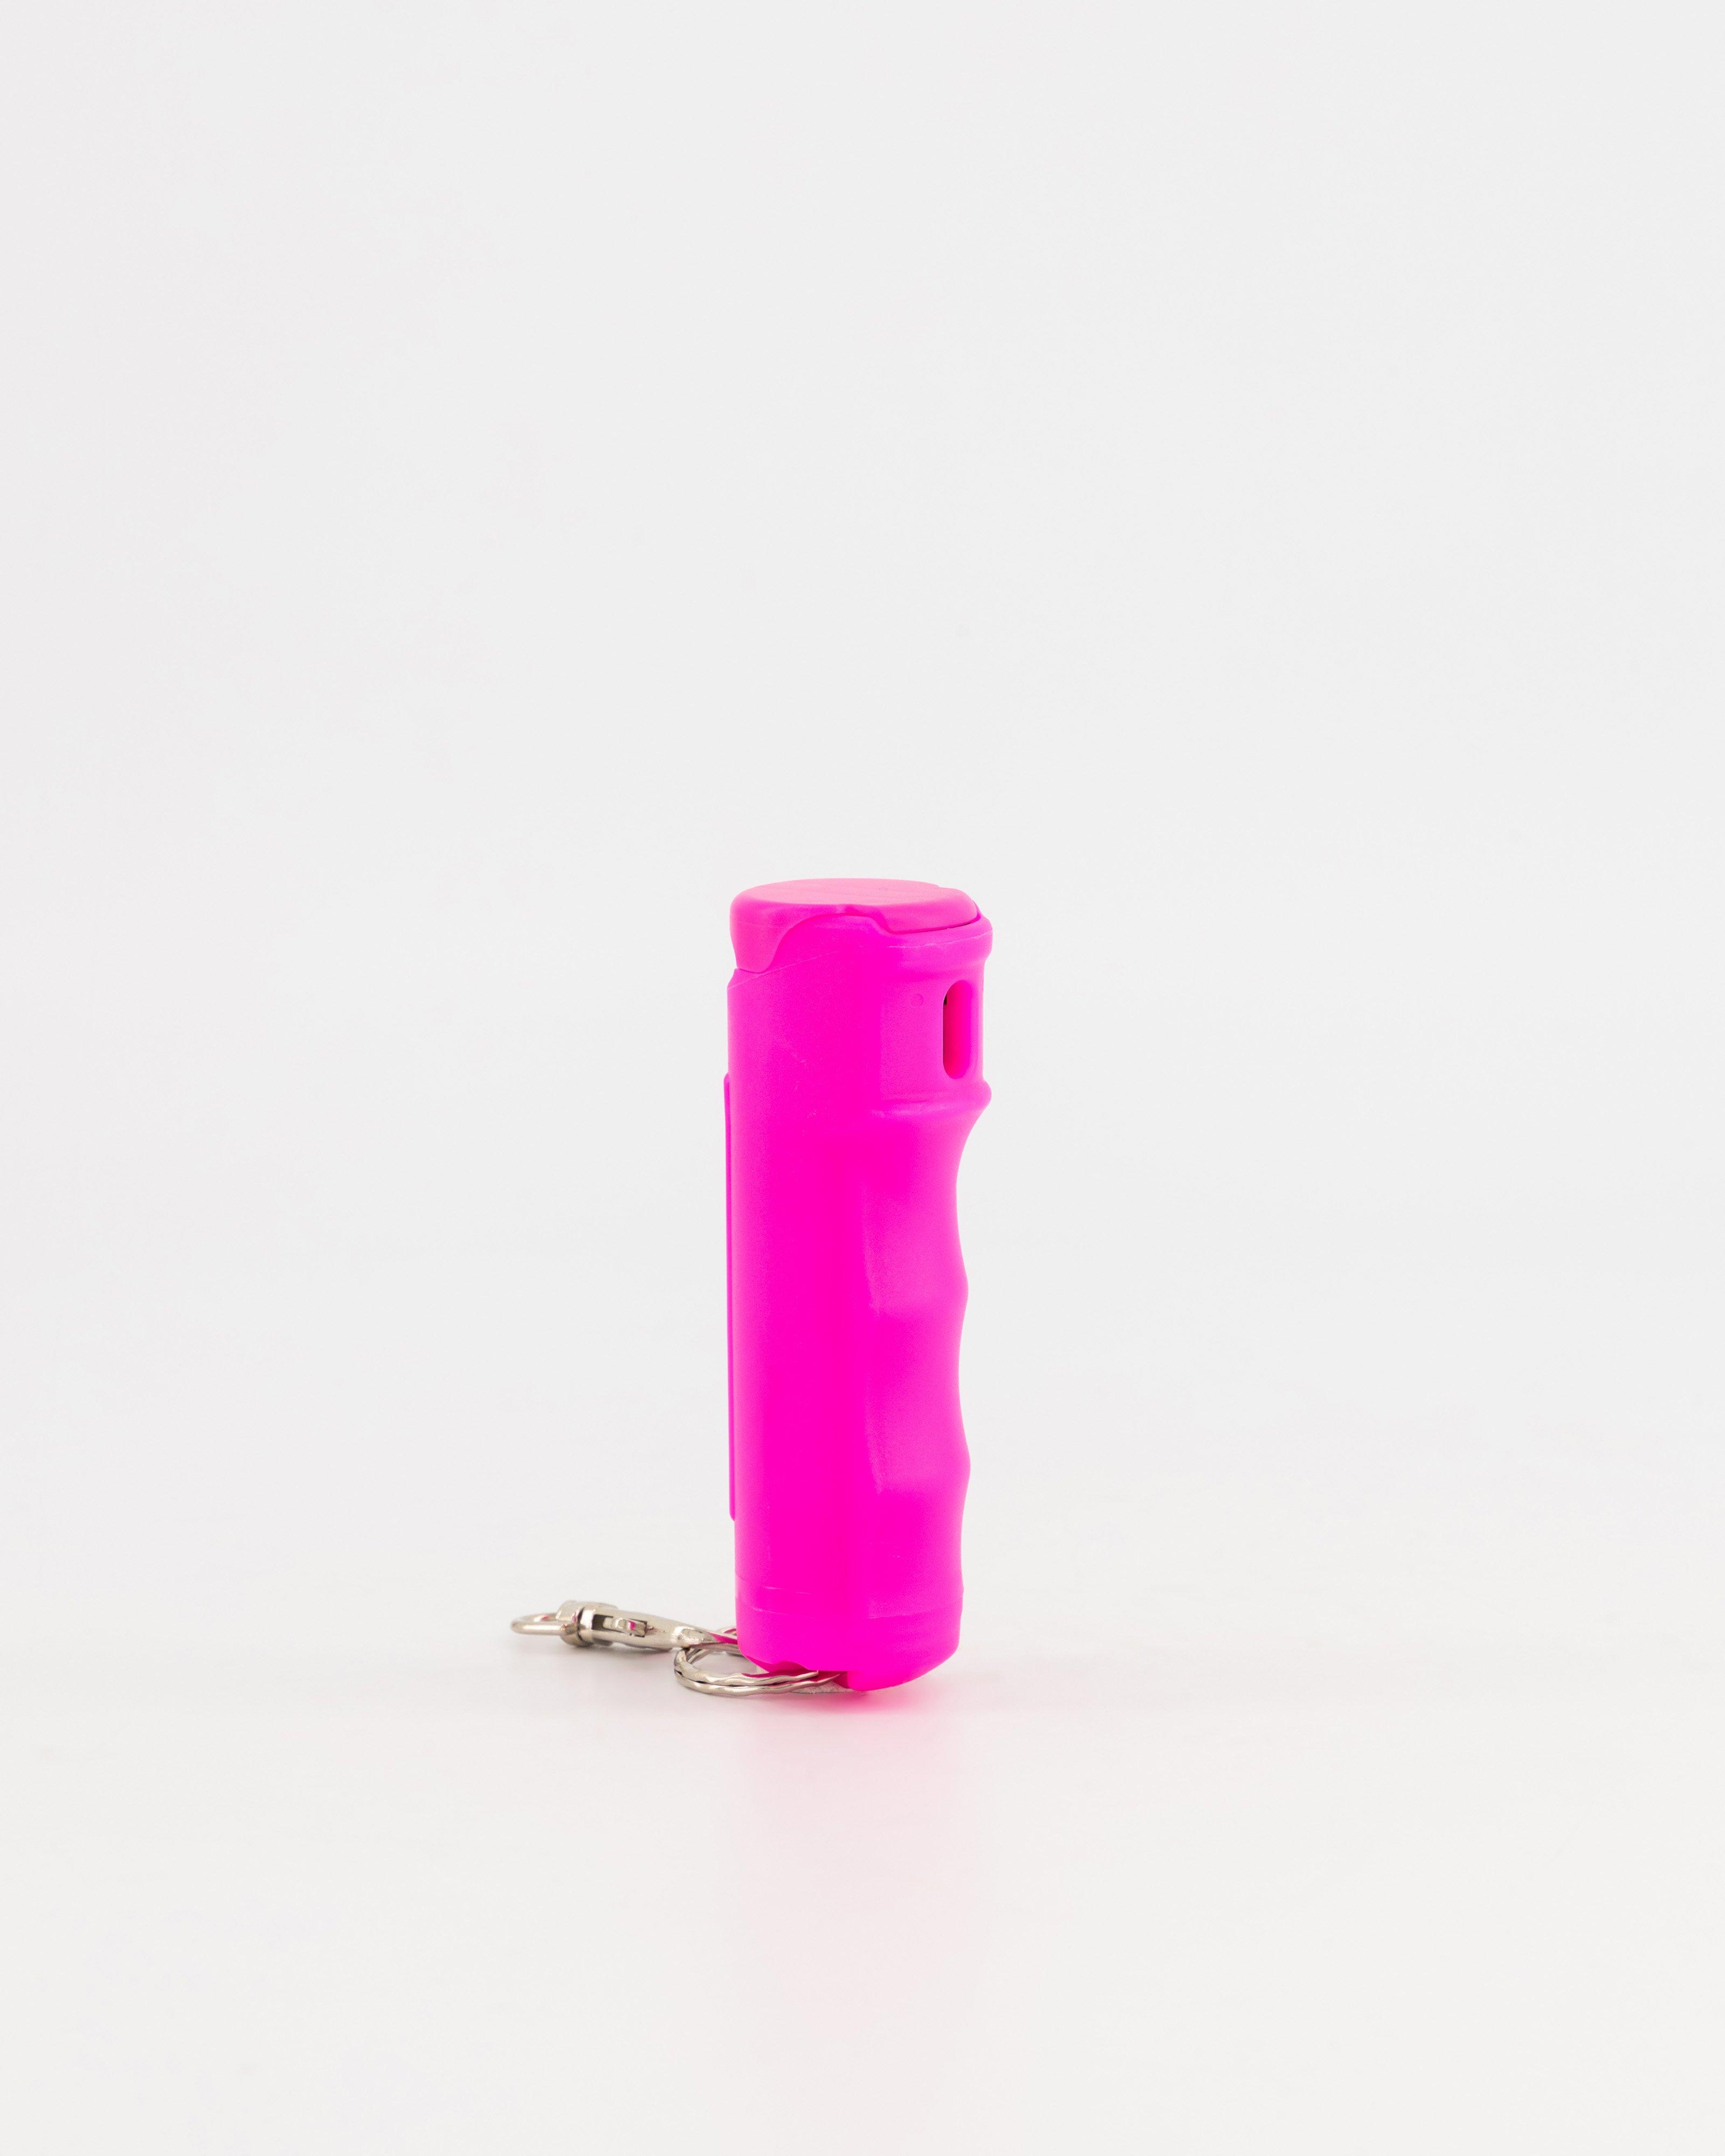 Mace KeyGuard Hard Case Pepper Spray -  Pink